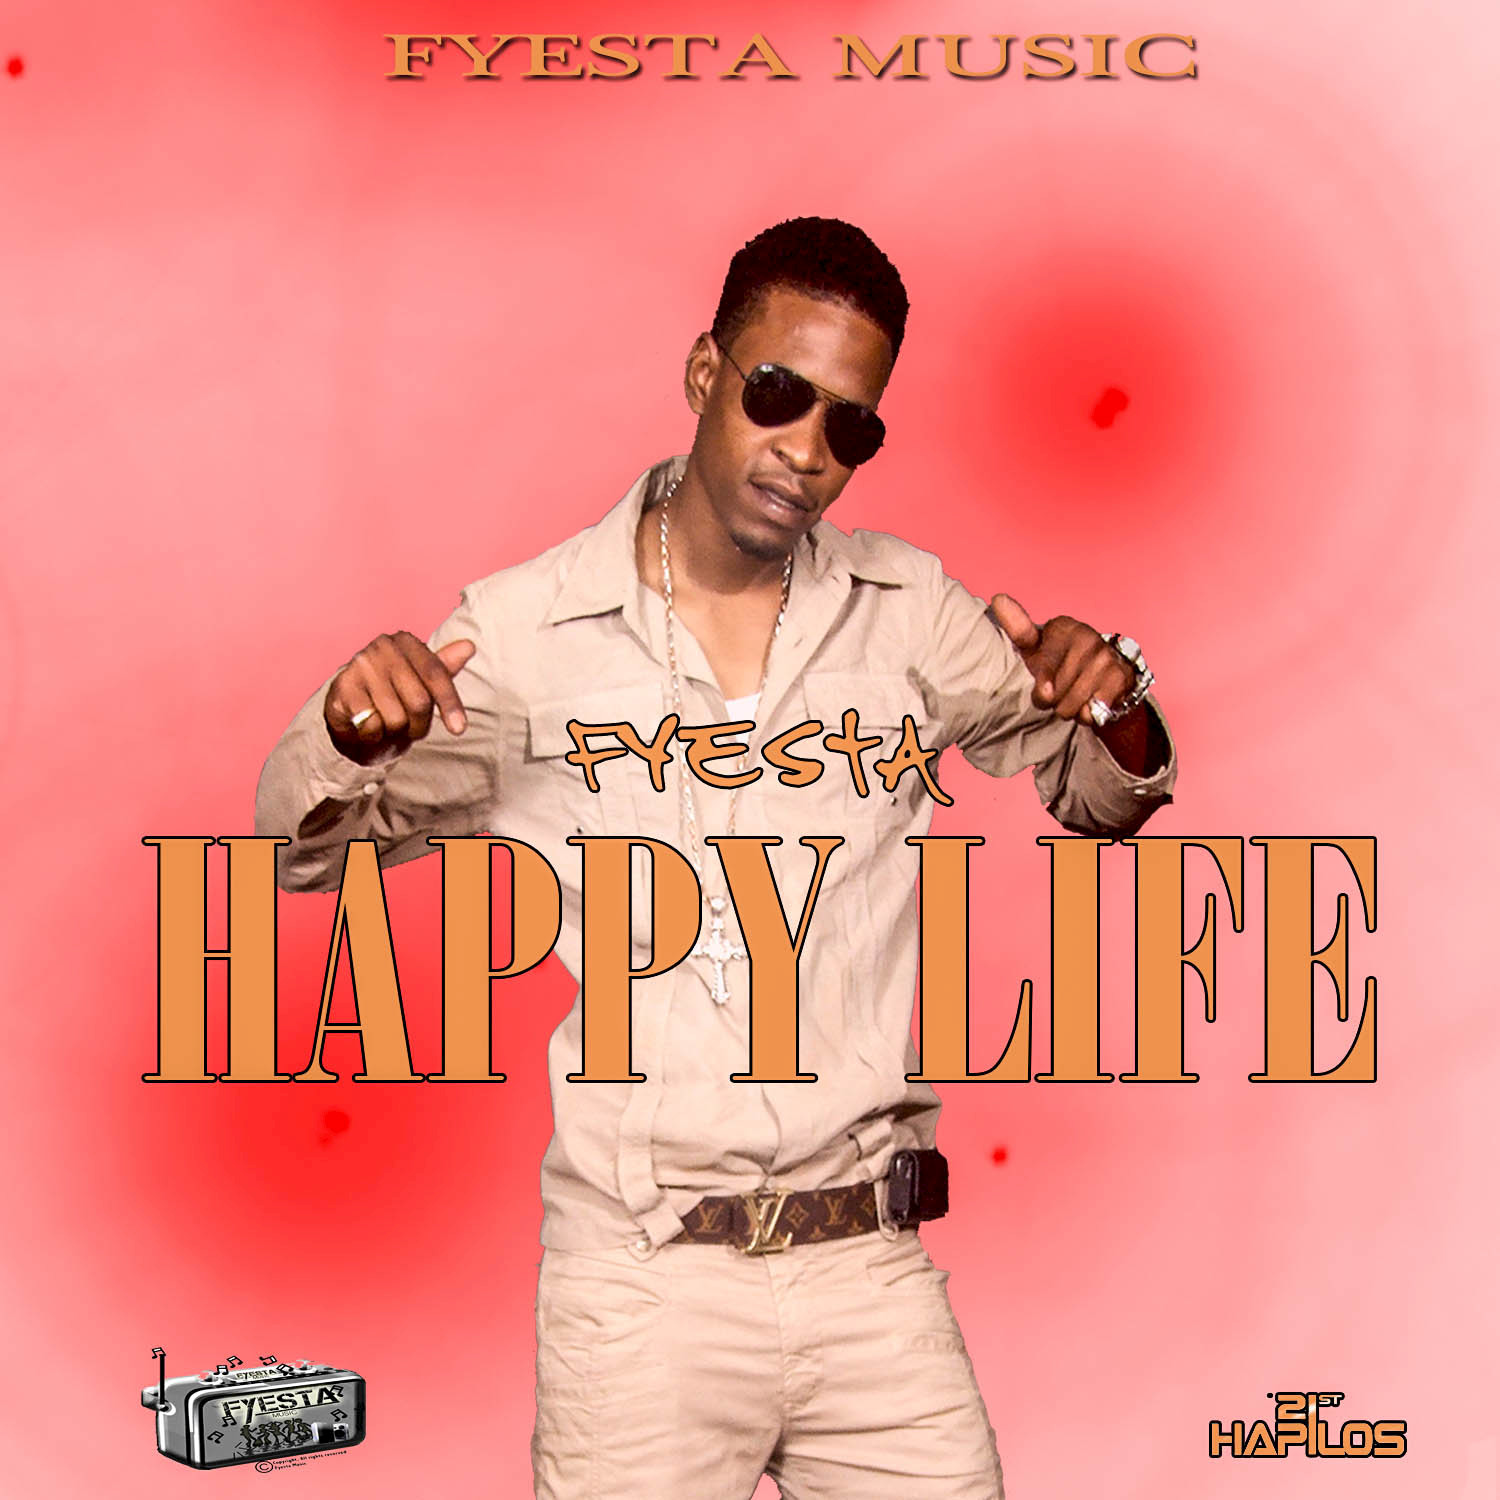 Happy Life - Single